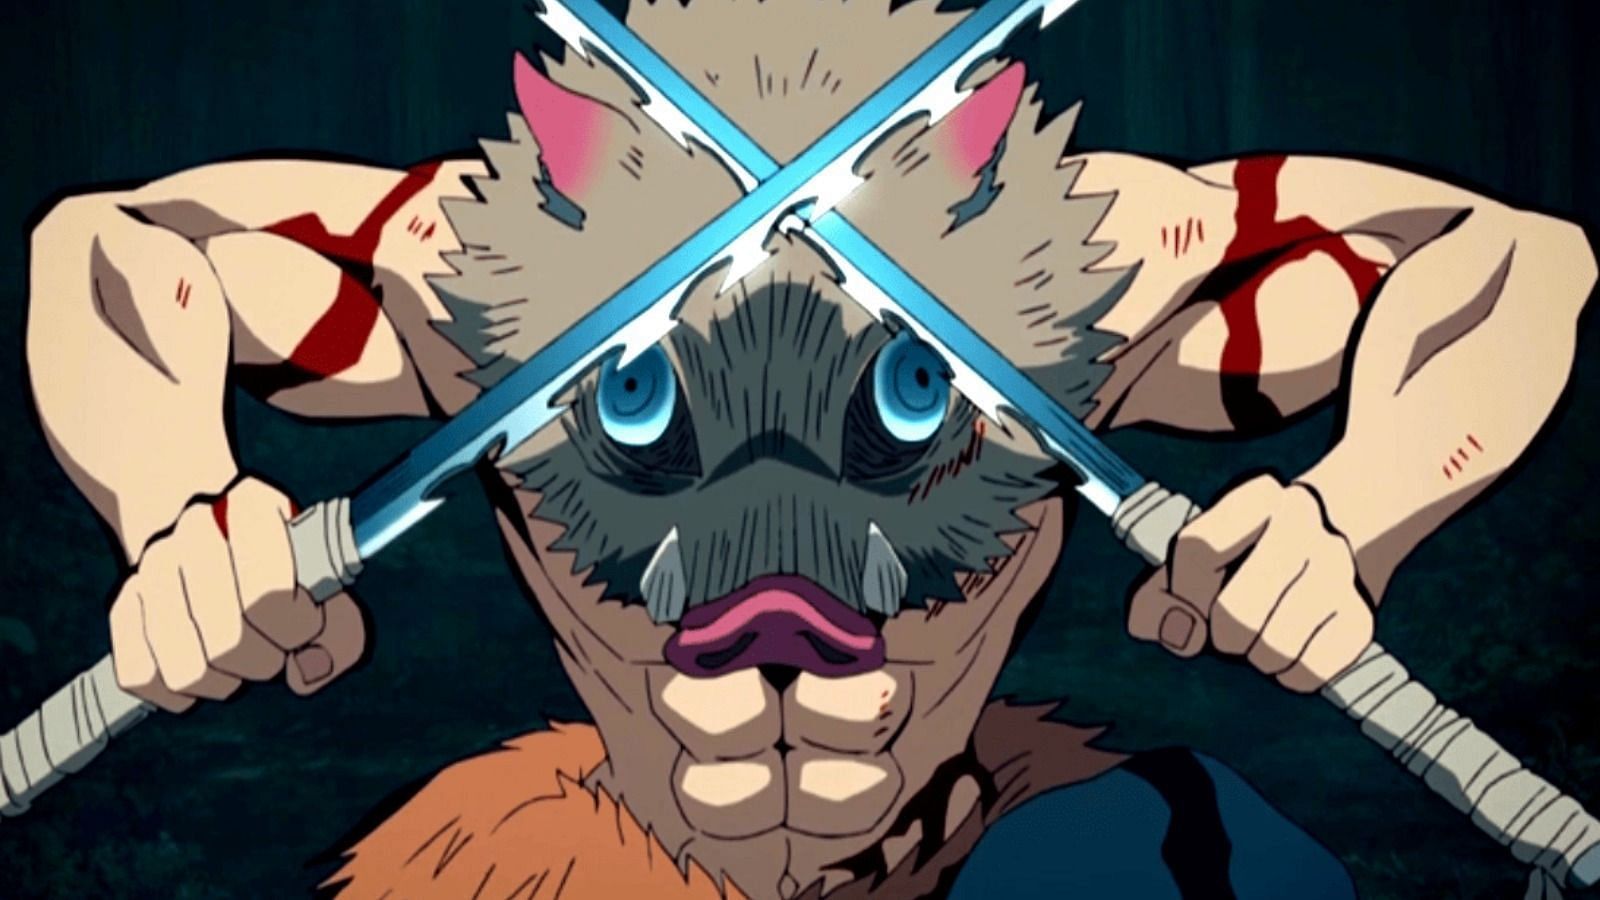 Inosuke Hashibira as seen in the anime Demon Slayer (Image via Ufotable)